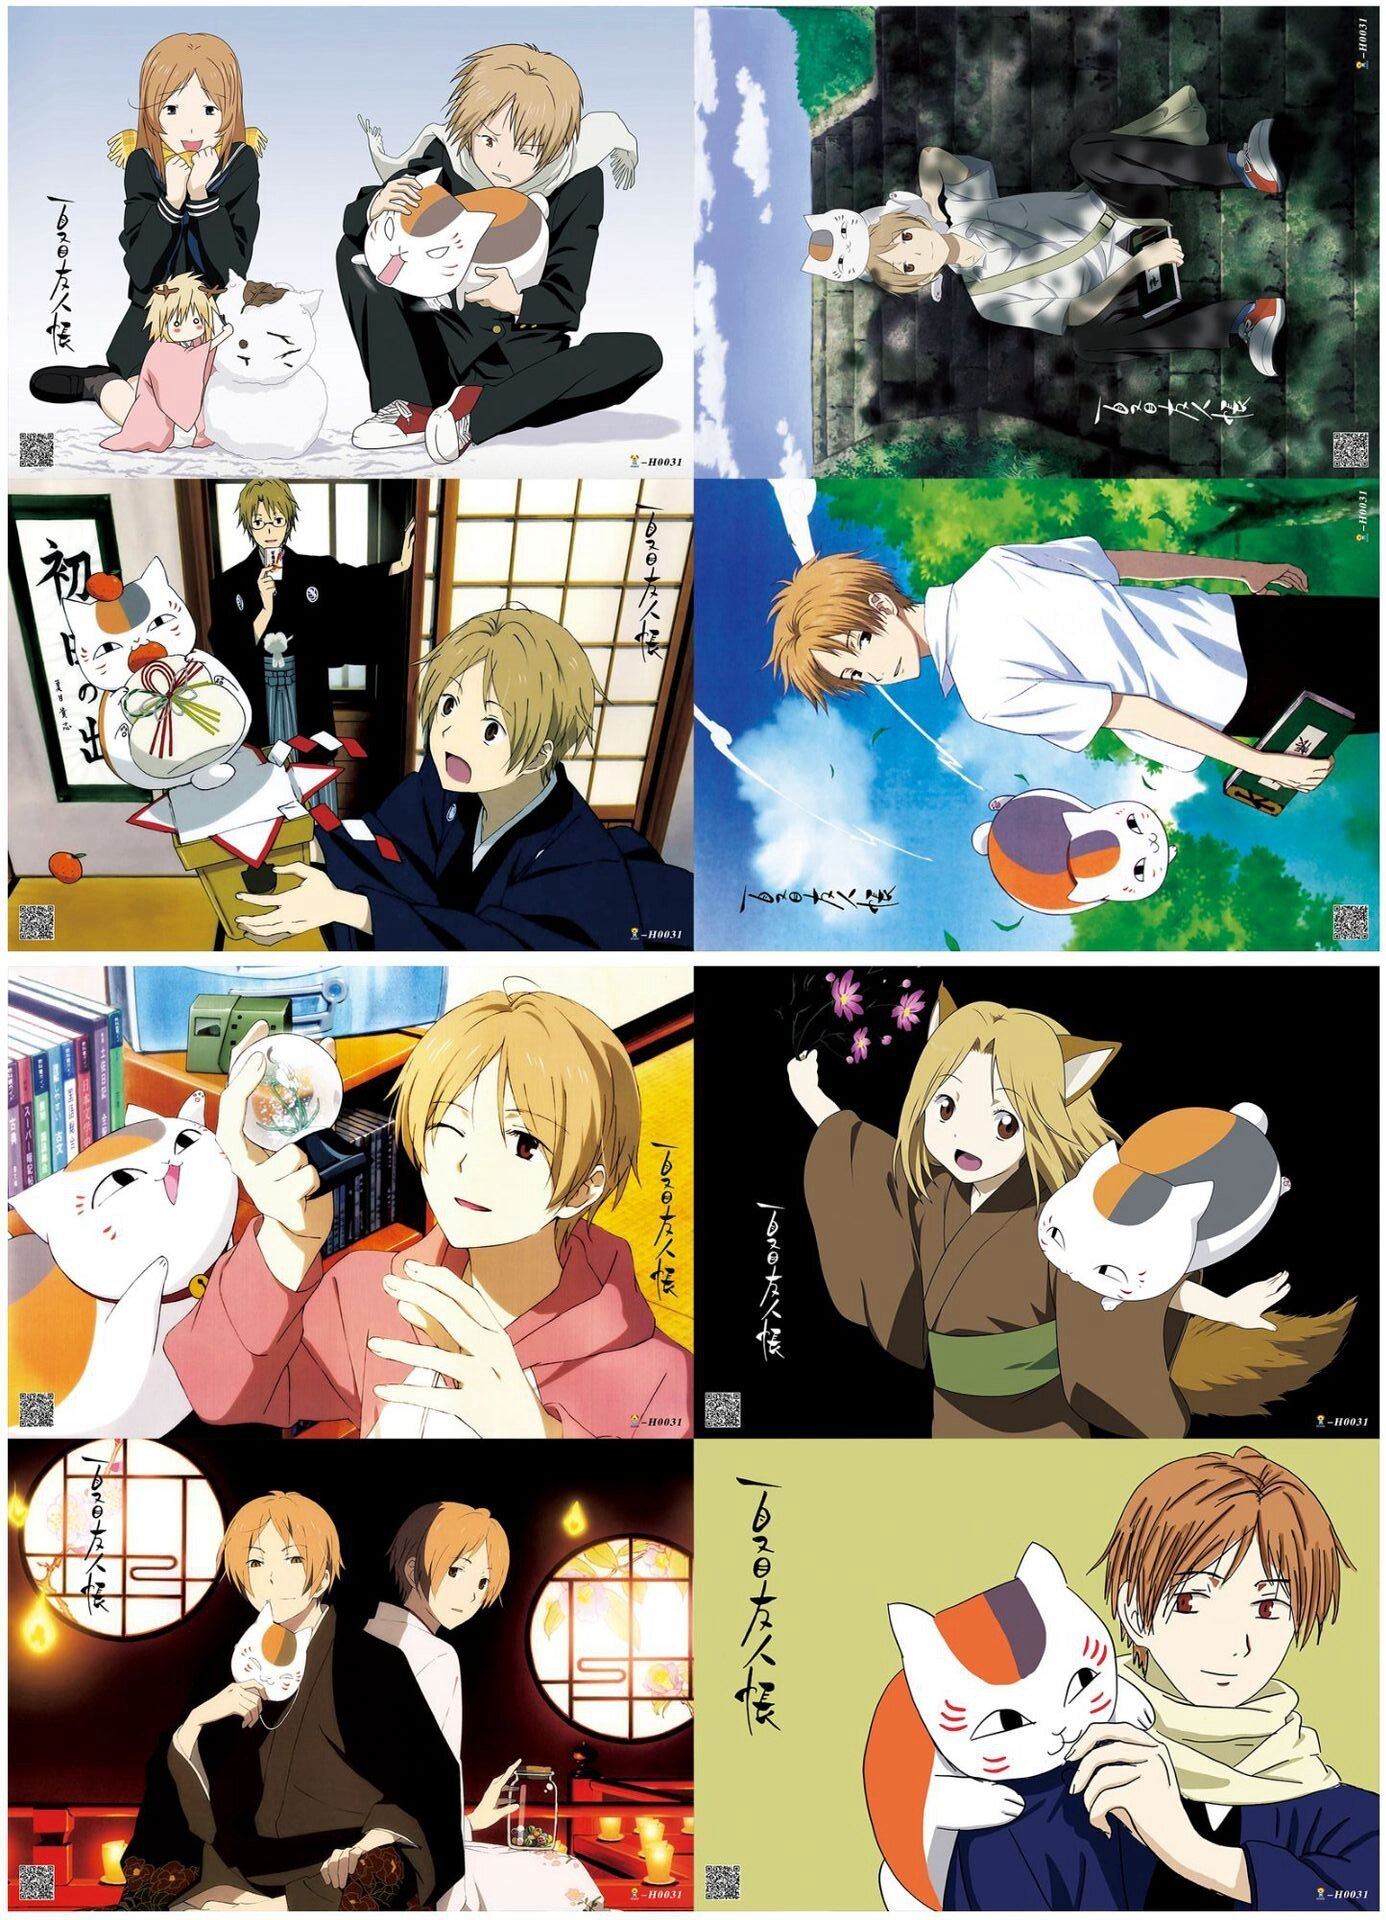 A Set of Eight Anime natsume yuujinchou Poster Home Room Wall Decoration Print 8x12 Set